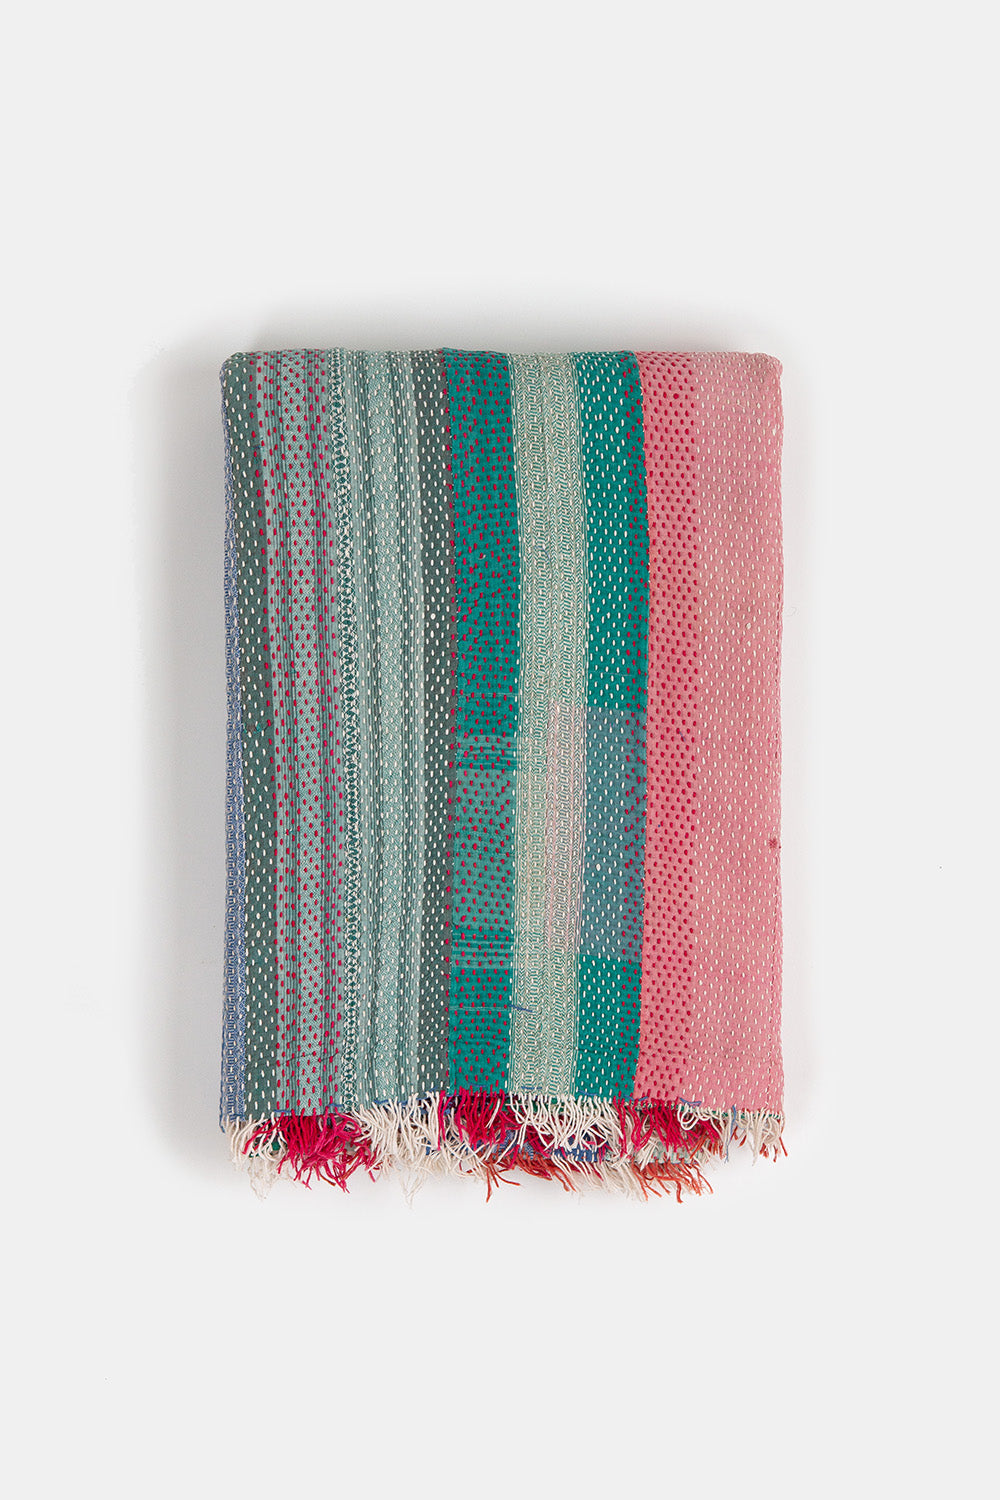 Vintage Kantha Quilt in Candy Stripe